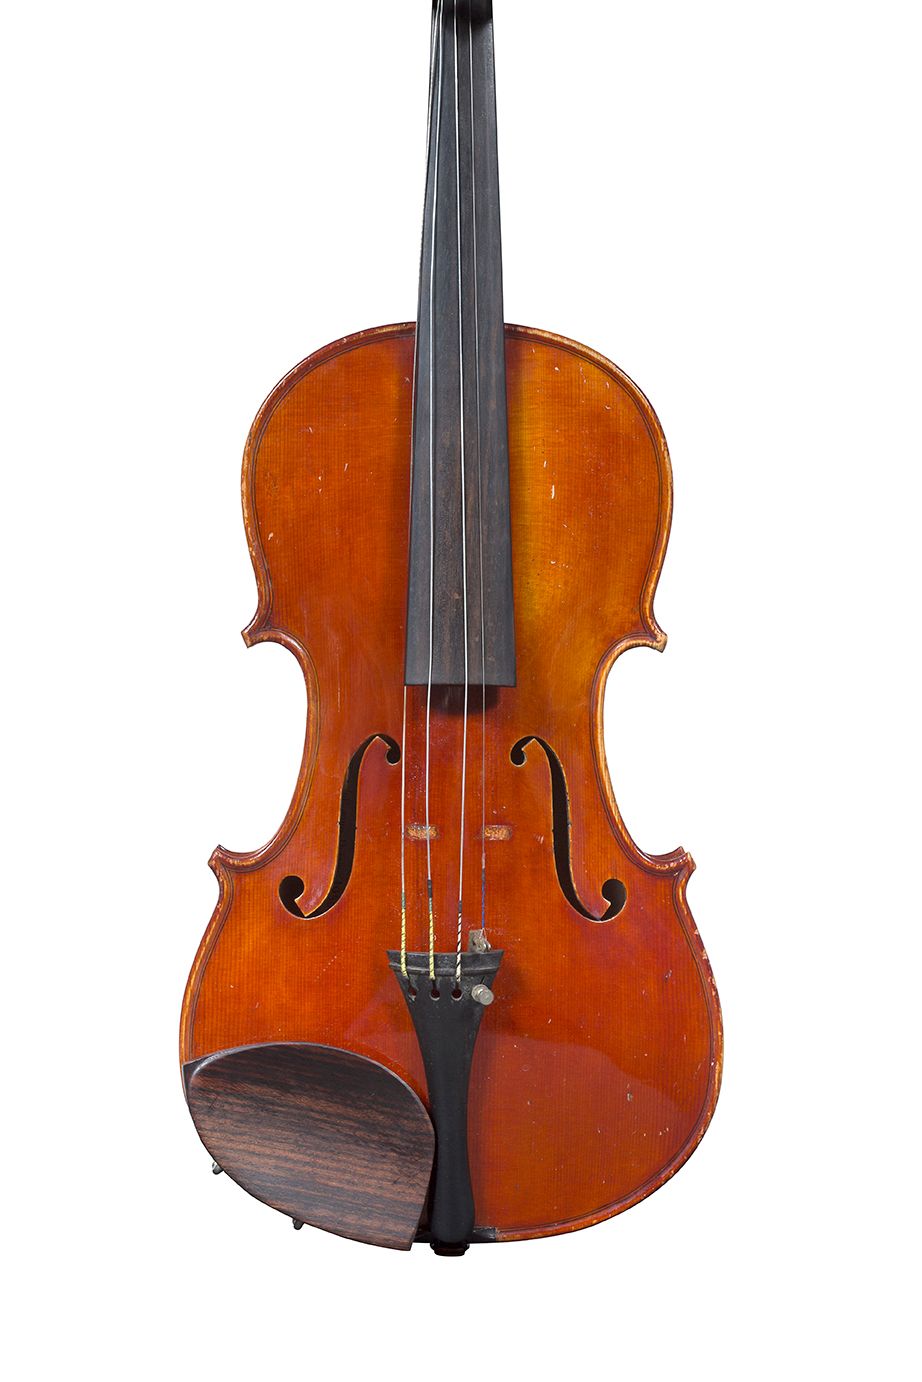 Null 20世纪中期的小提琴
带有 "Carolus Badarello à Turin 1930 "的伪装标签。
附有Gilles Chancereul的证&hellip;